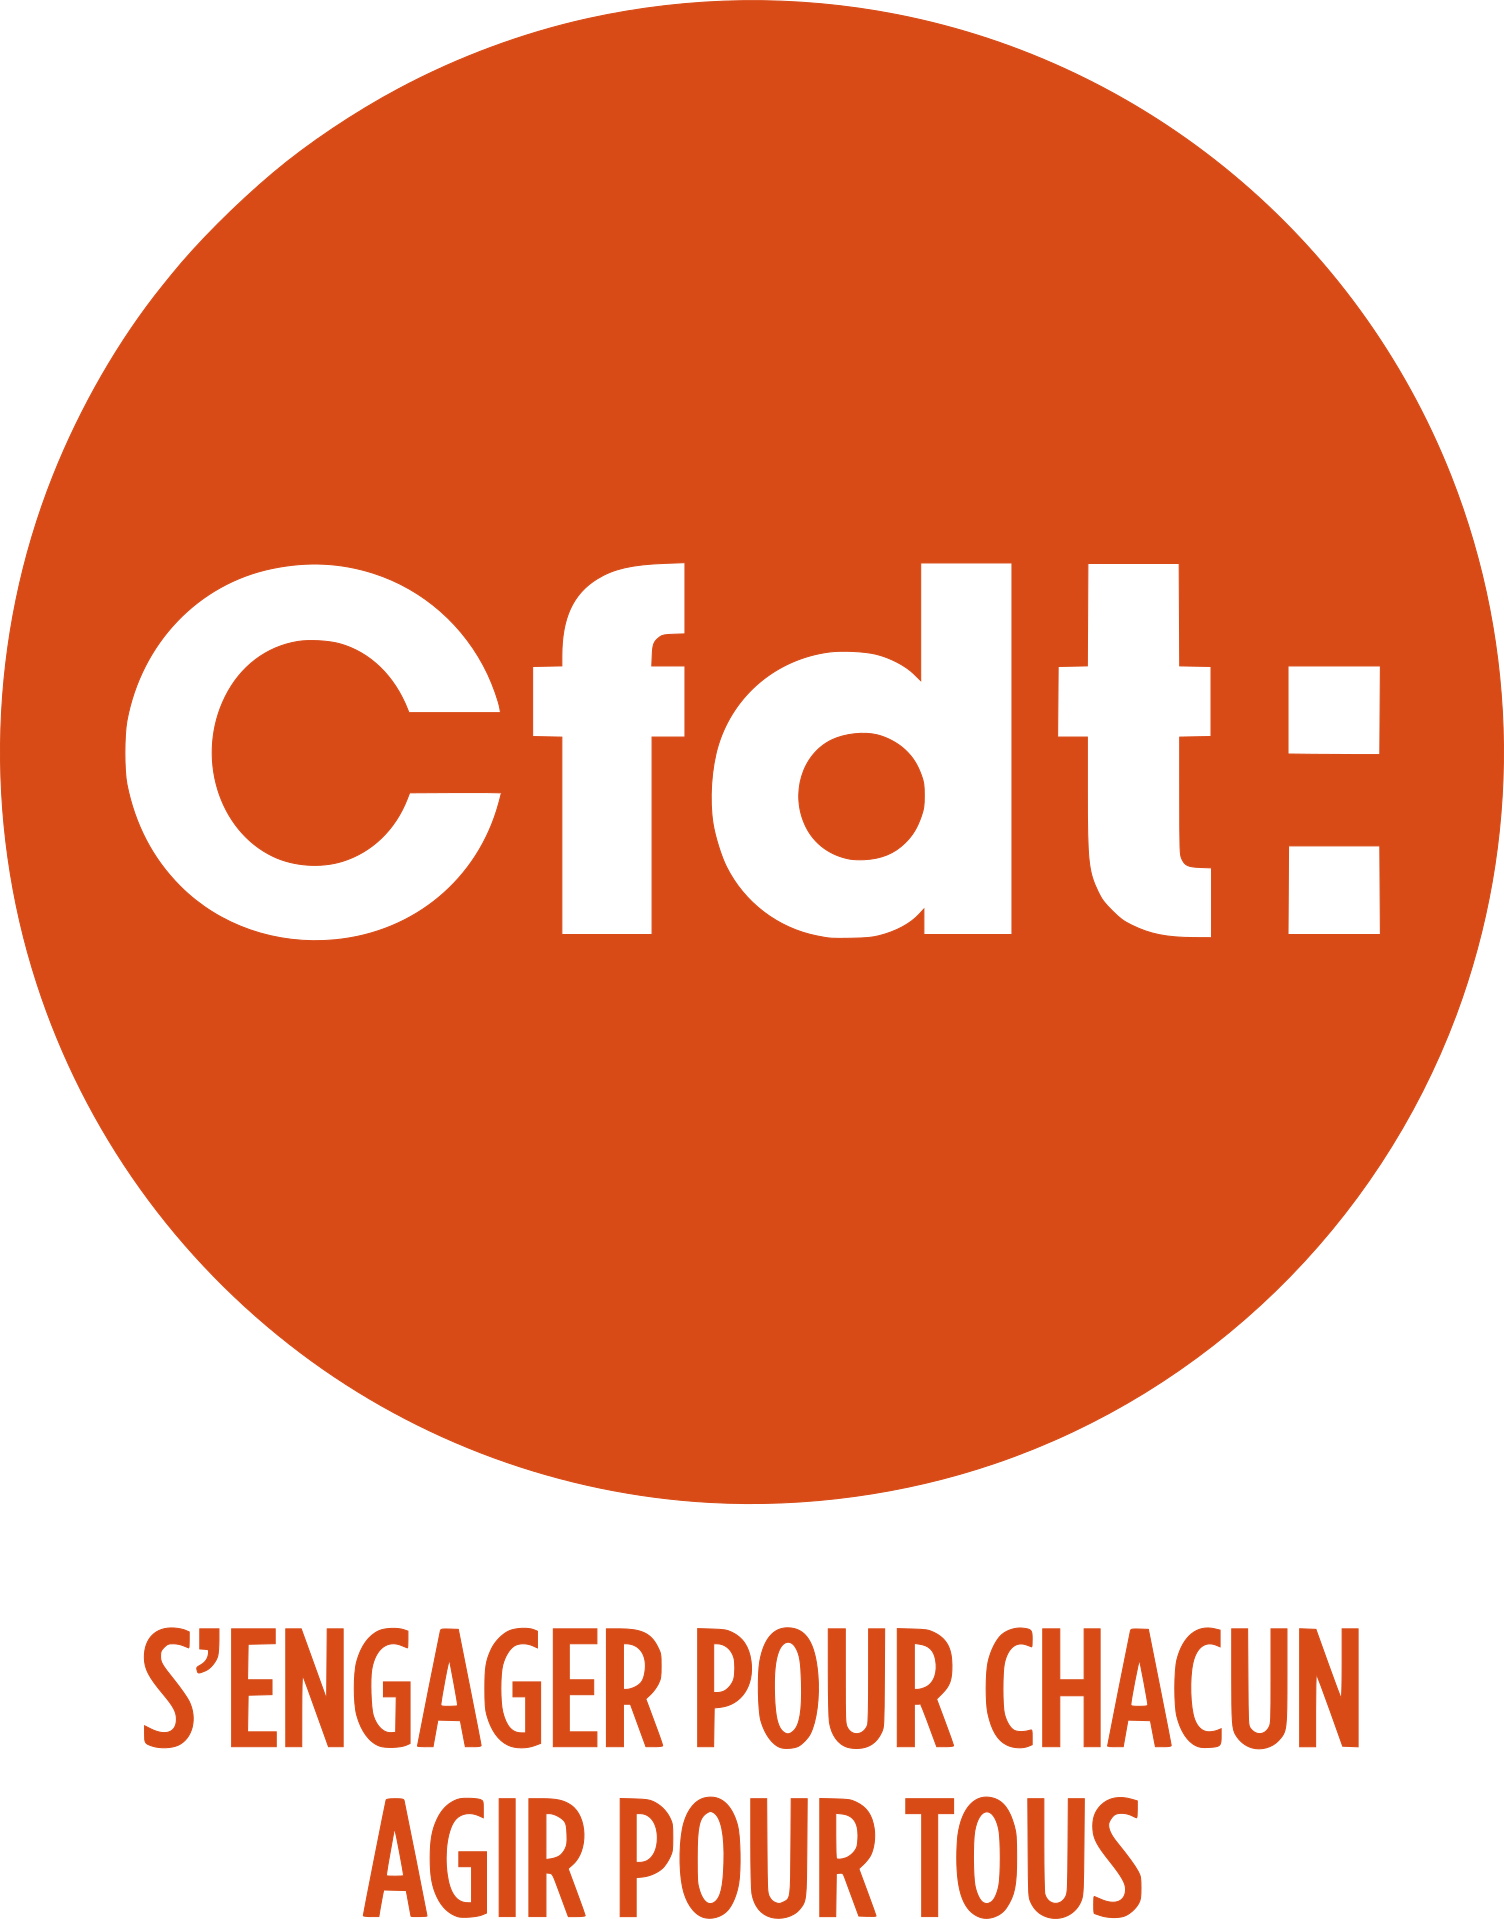 CFDT logo